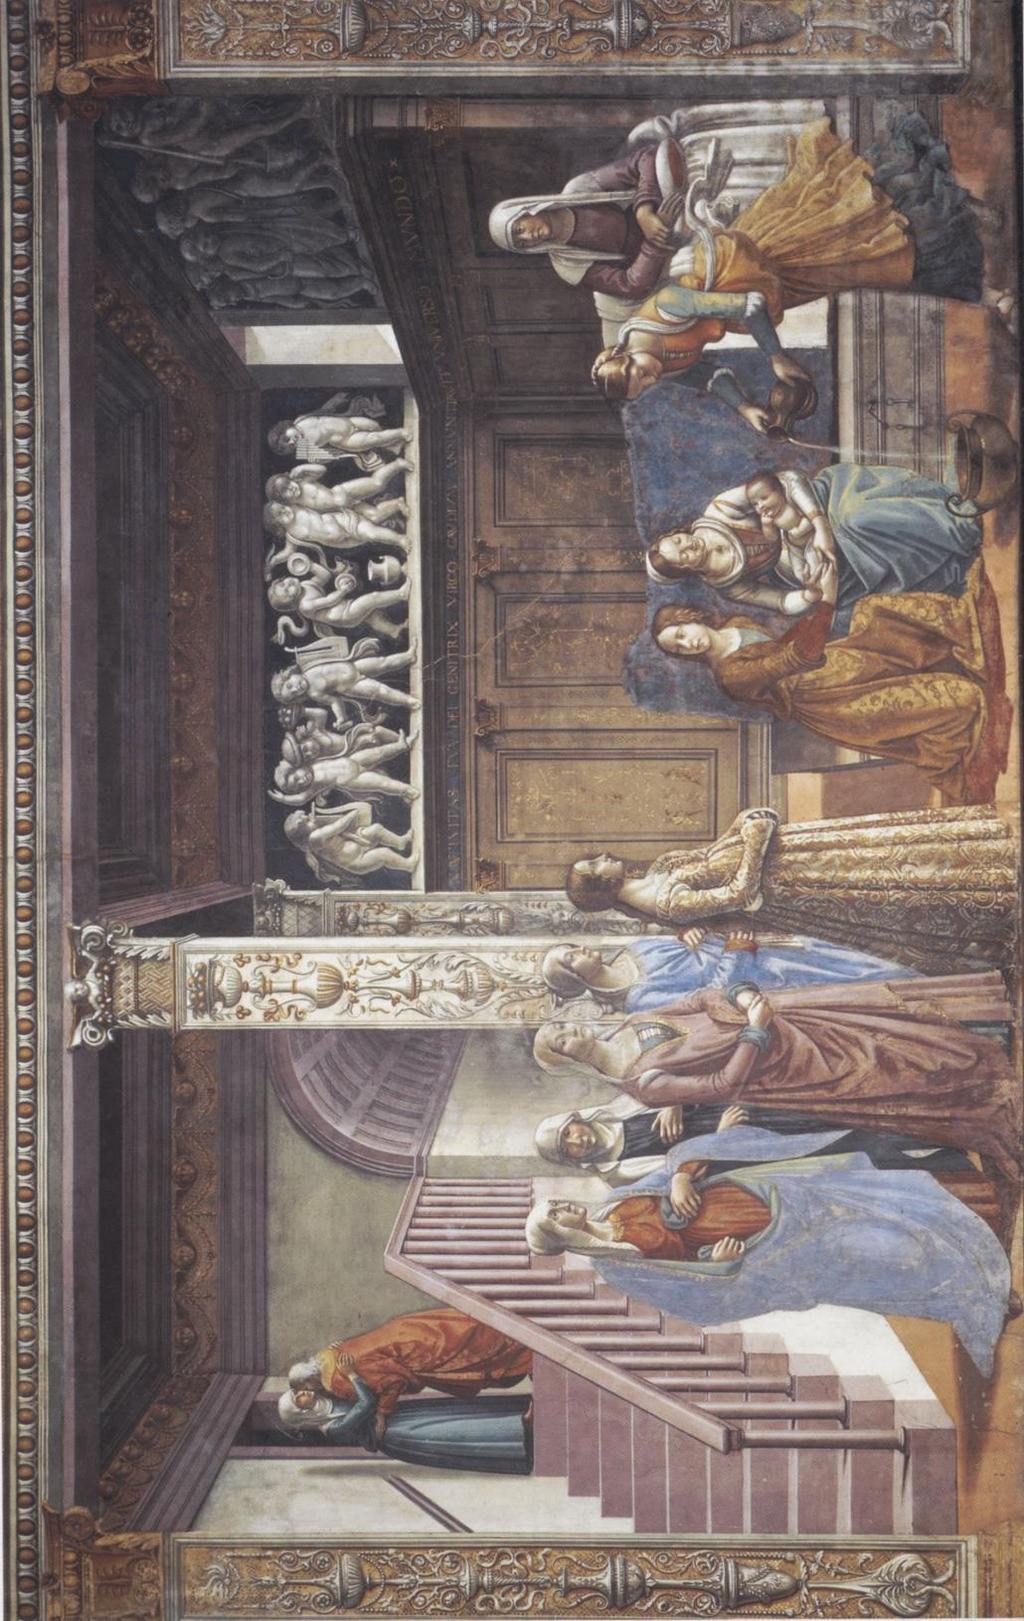 Plate 25: Domenico Bigordi called Ghirlandaio, and workshop, Birth of the Virgin, first